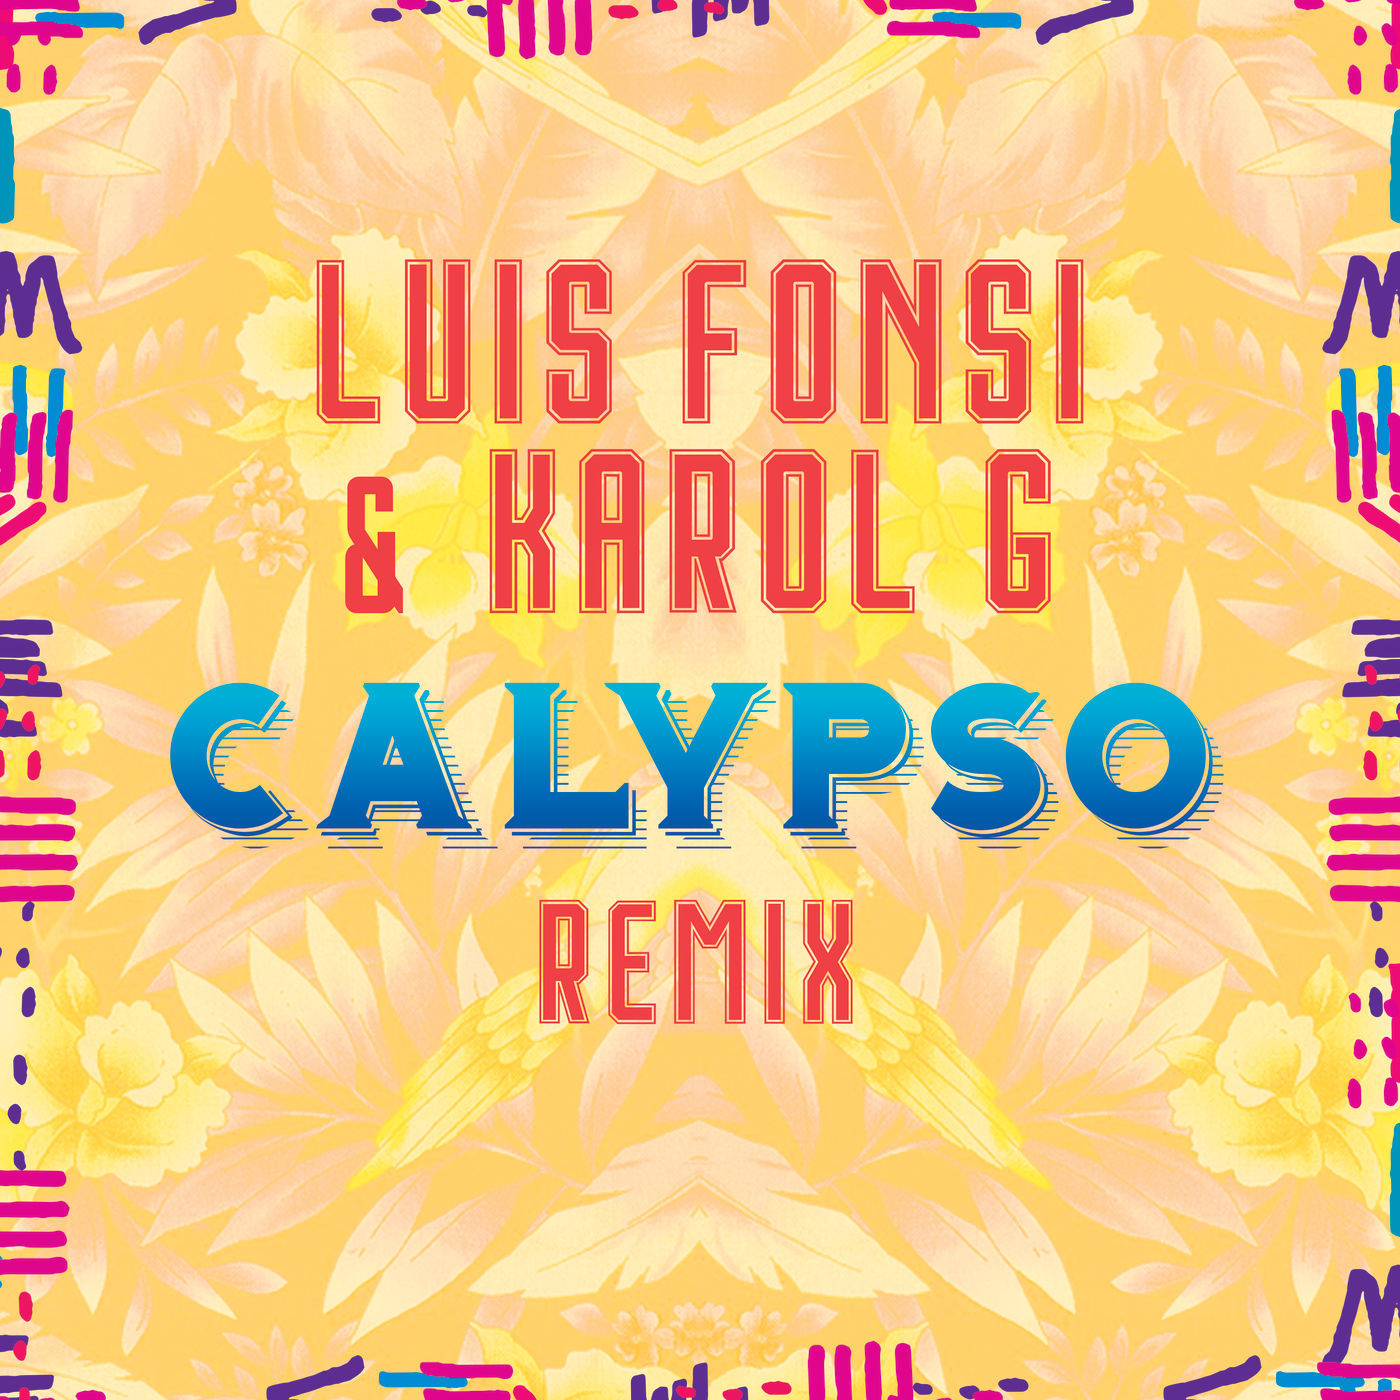 Luis Fonsi Ft. Karol G - Calypso (Remix).mp3